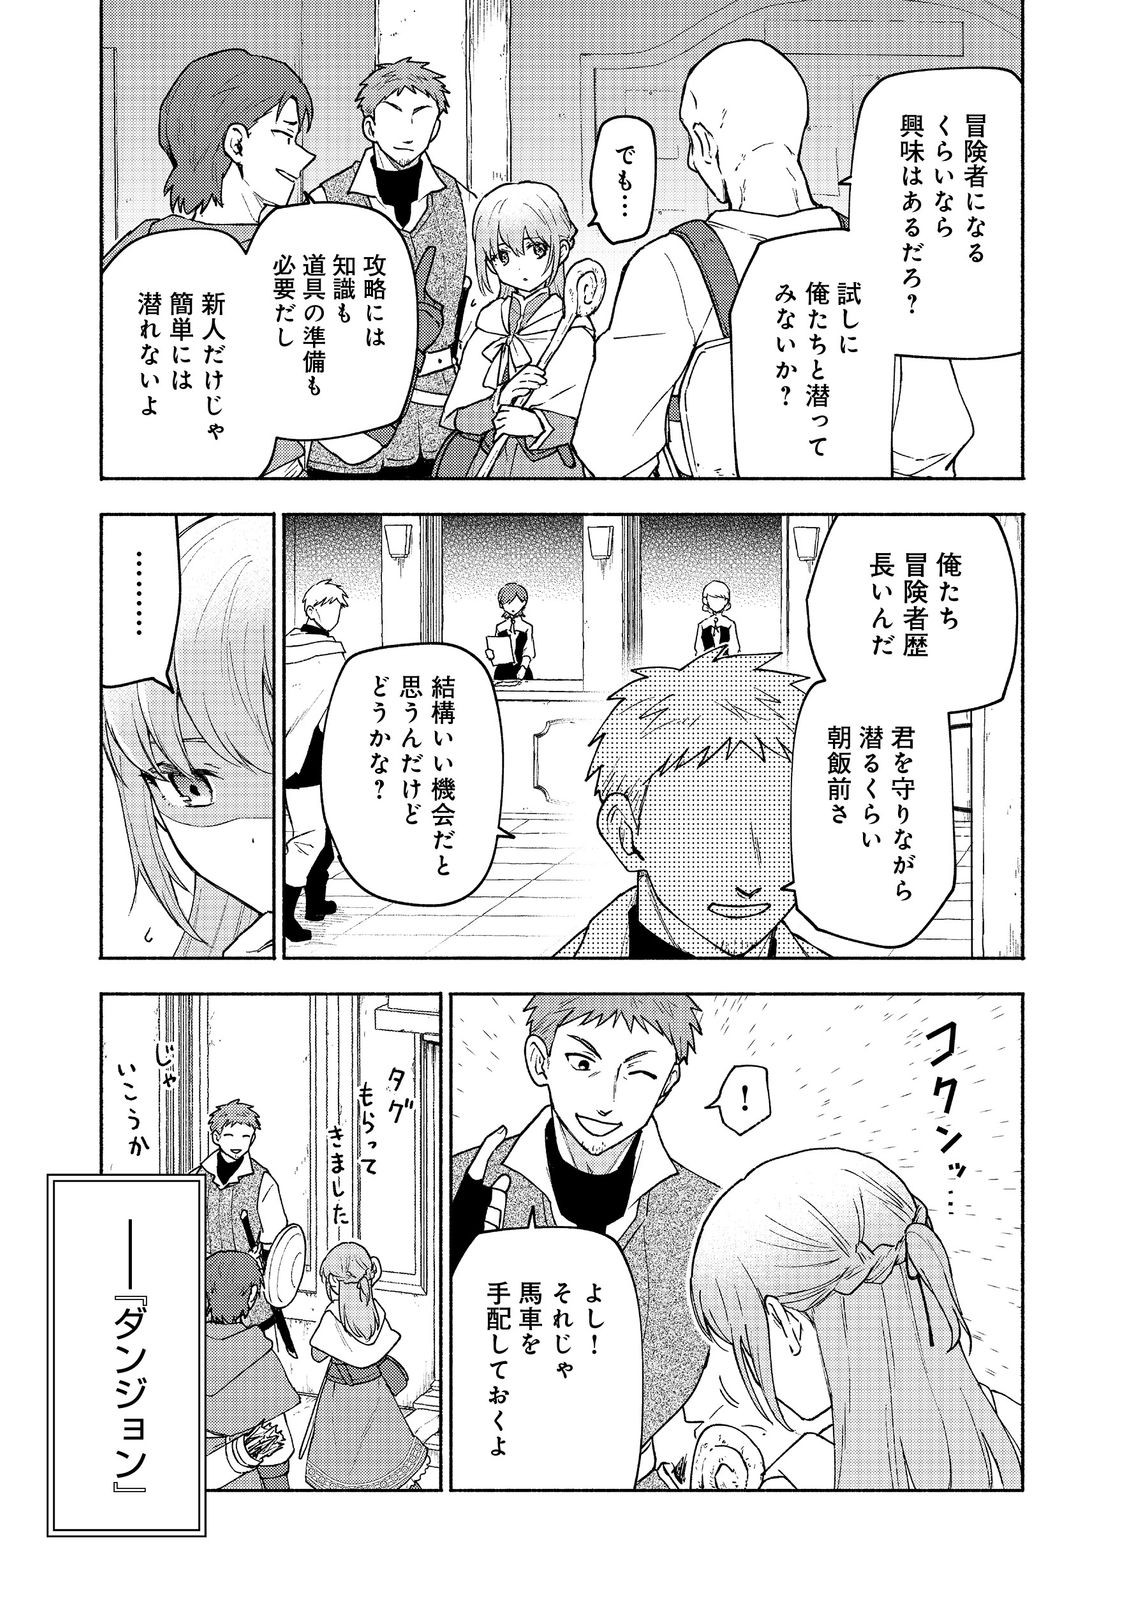 Otome Game no Heroine de Saikyou Survival - Chapter 20 - Page 3